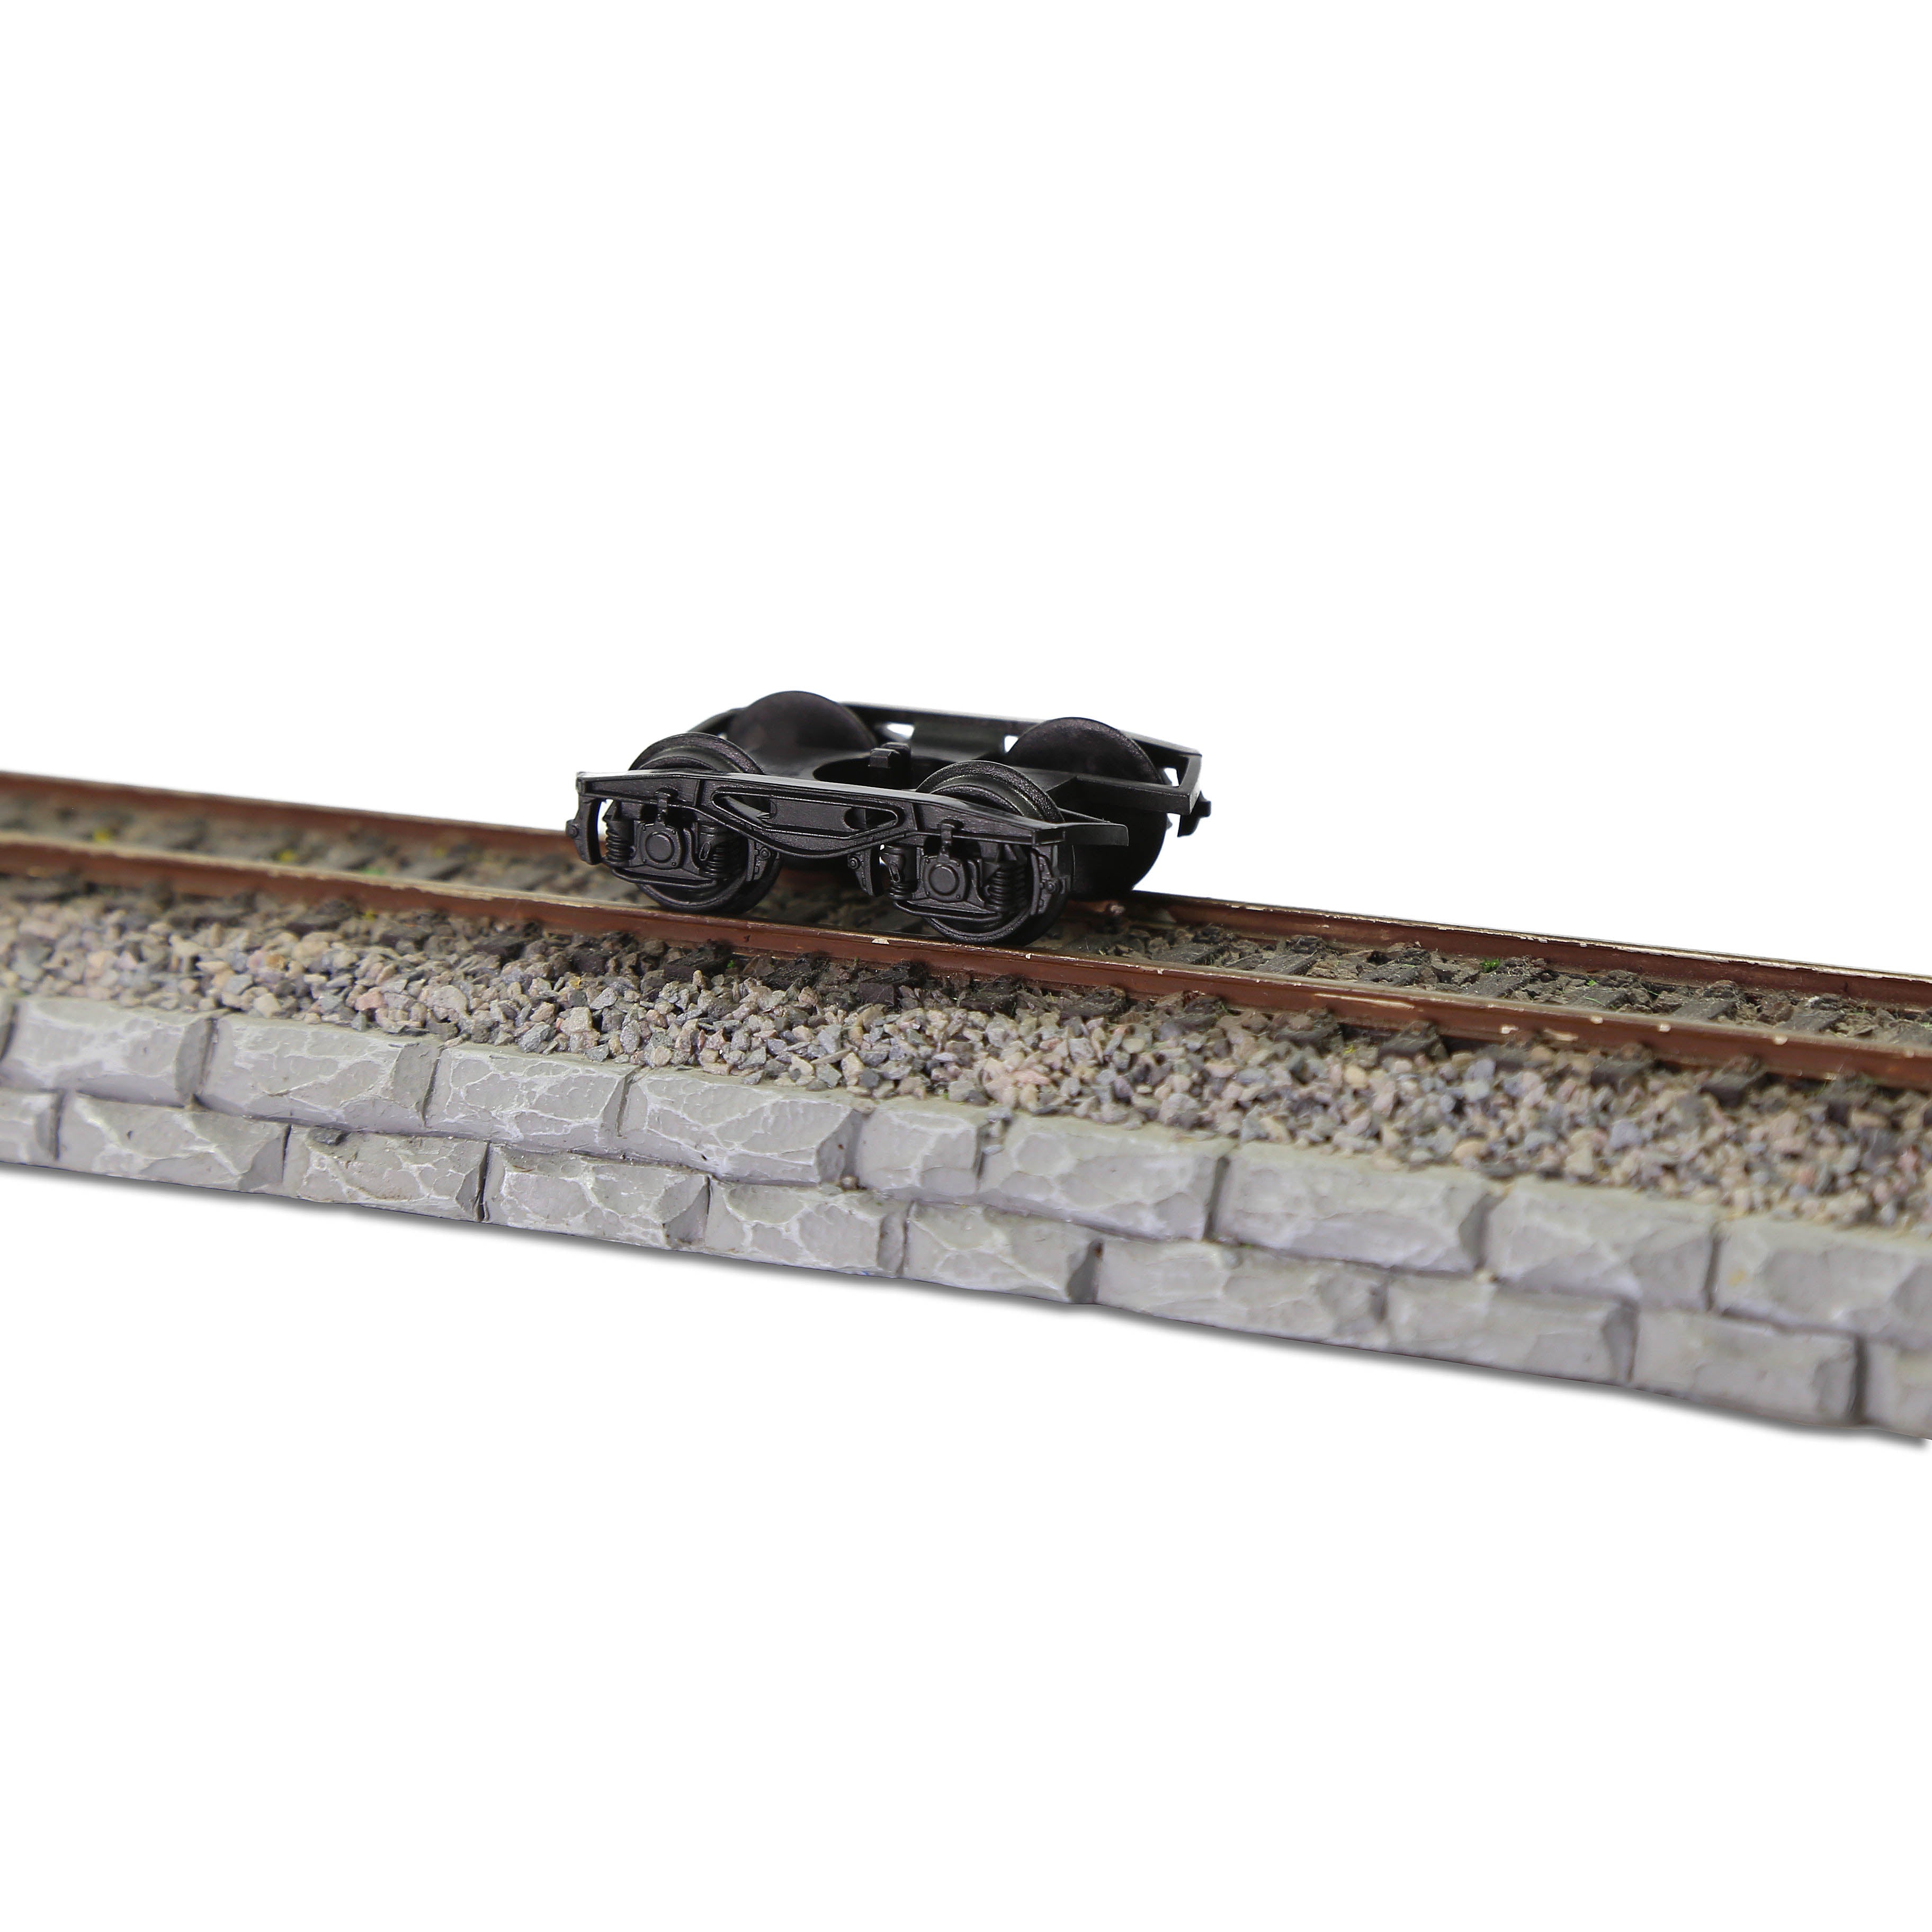 Accessories Plastic Trains Scale N, Railway Model Scale N